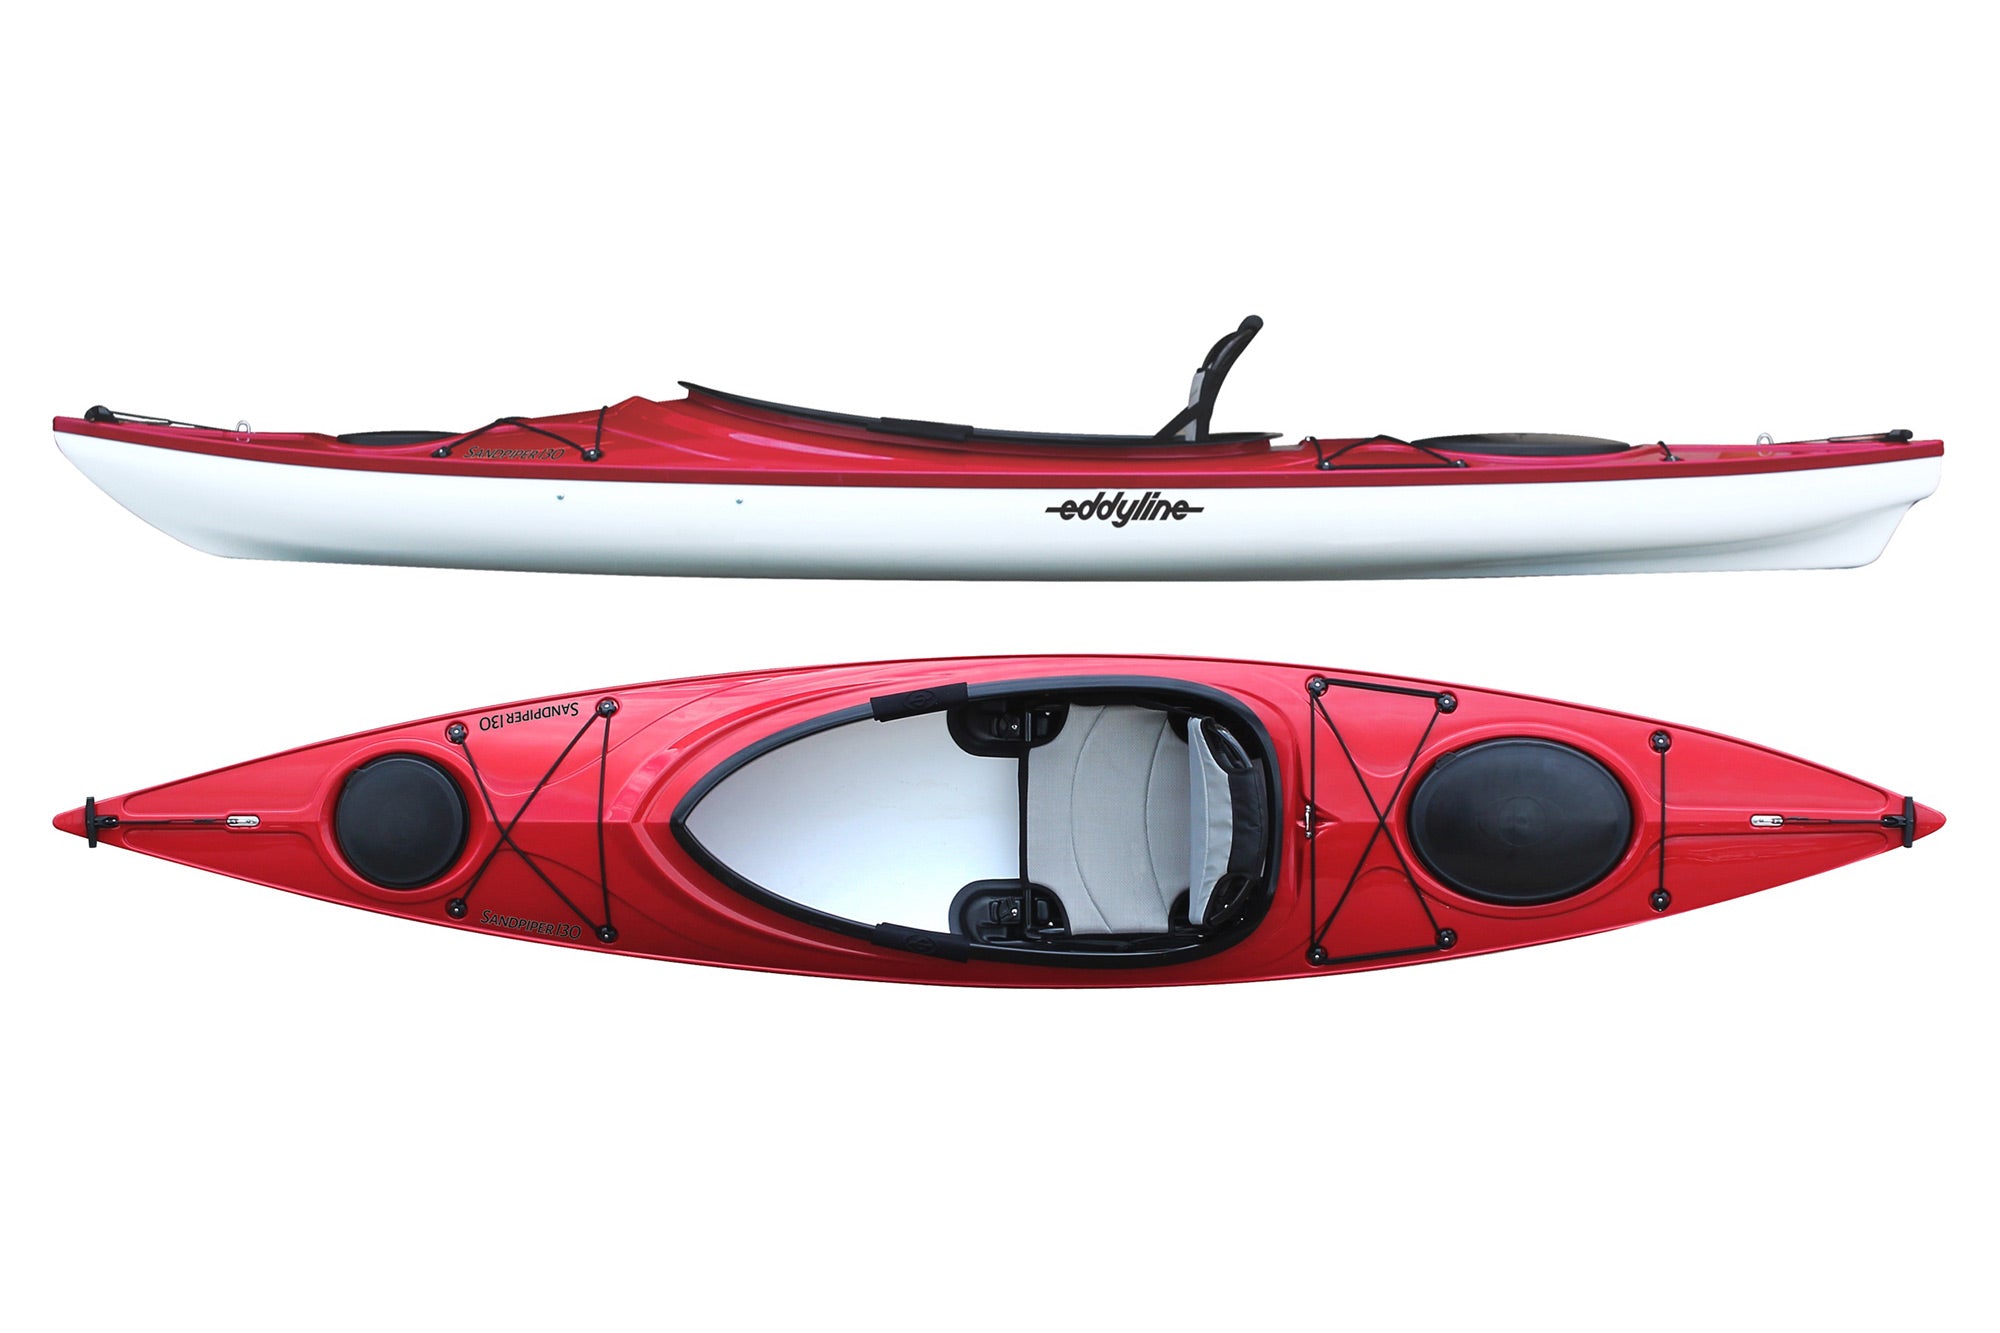 Sandpiper 130 | 13ft Recreational Kayak from Eddyline Kayaks